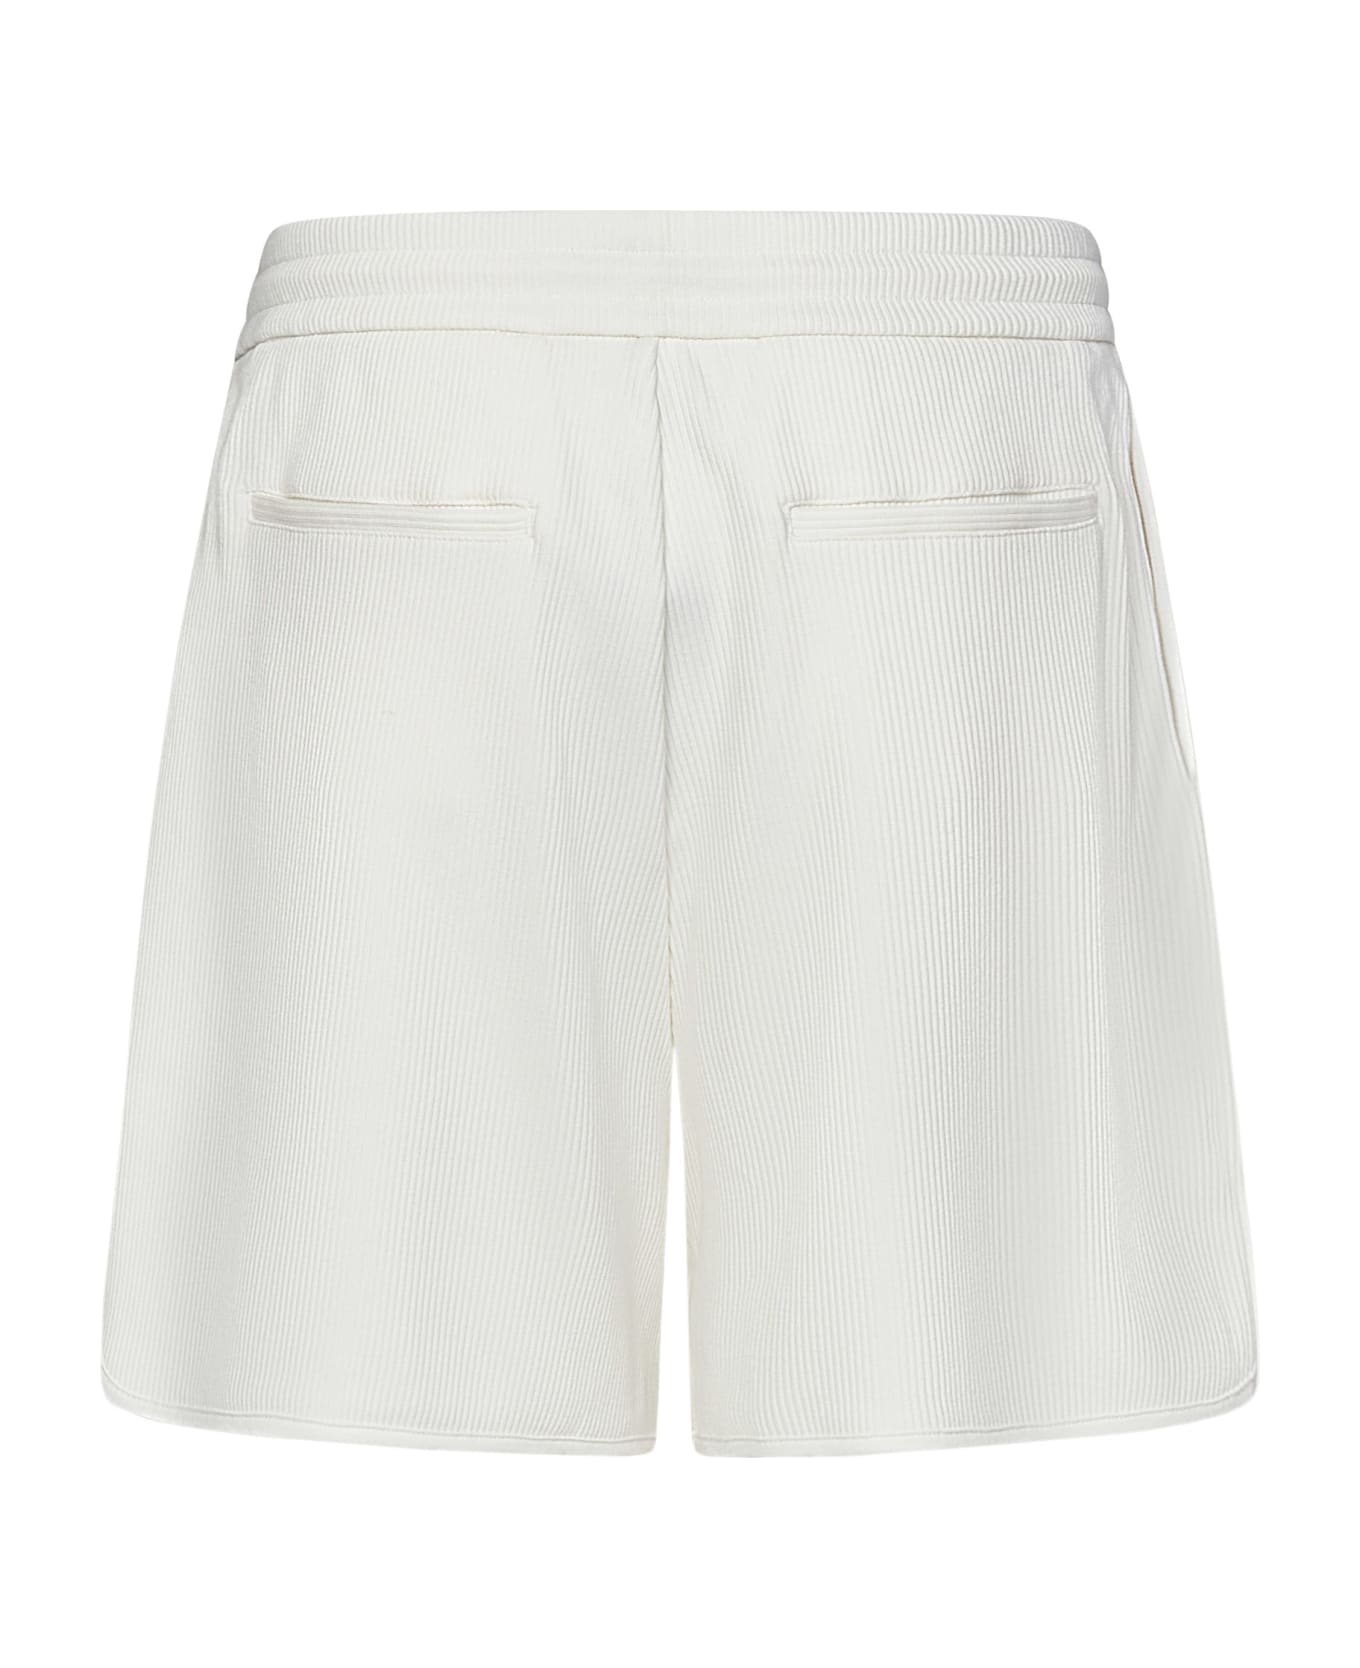 Emporio Armani Shorts - White ショートパンツ